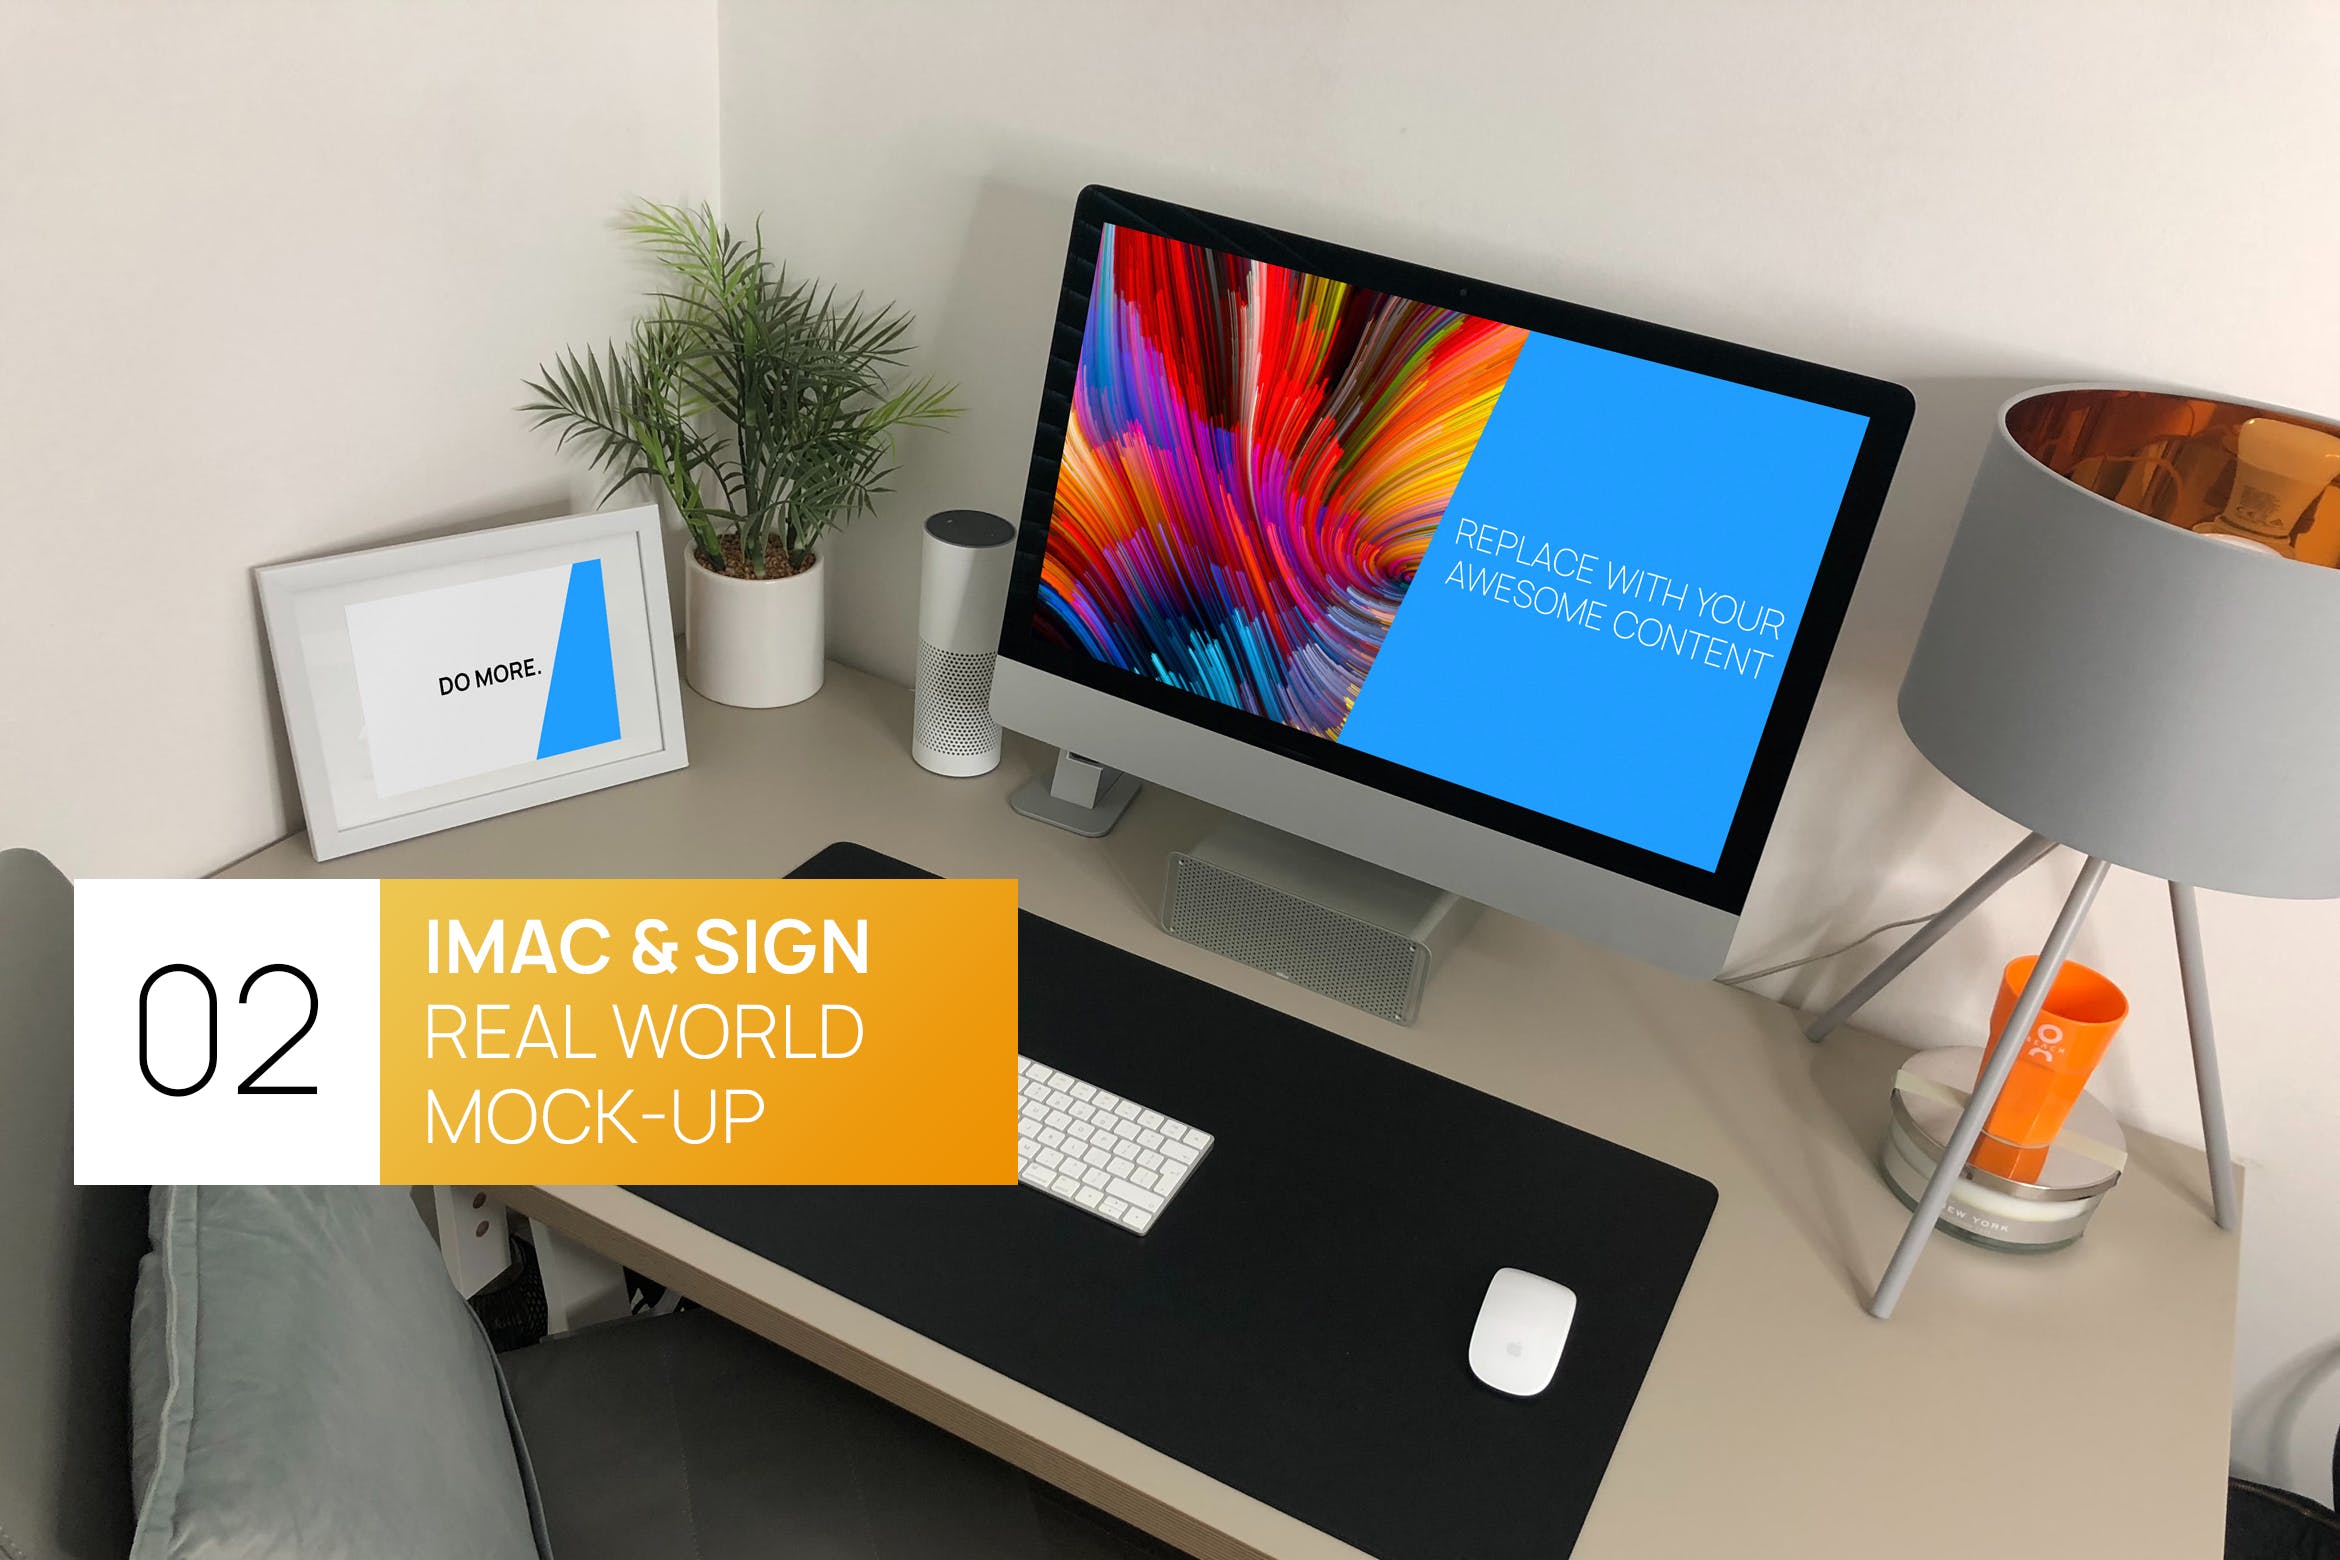 宜家家居风格办公桌场景27寸iMac电脑素材库精选样机 iMac 27 with Sign Real World Photo Mock-up插图